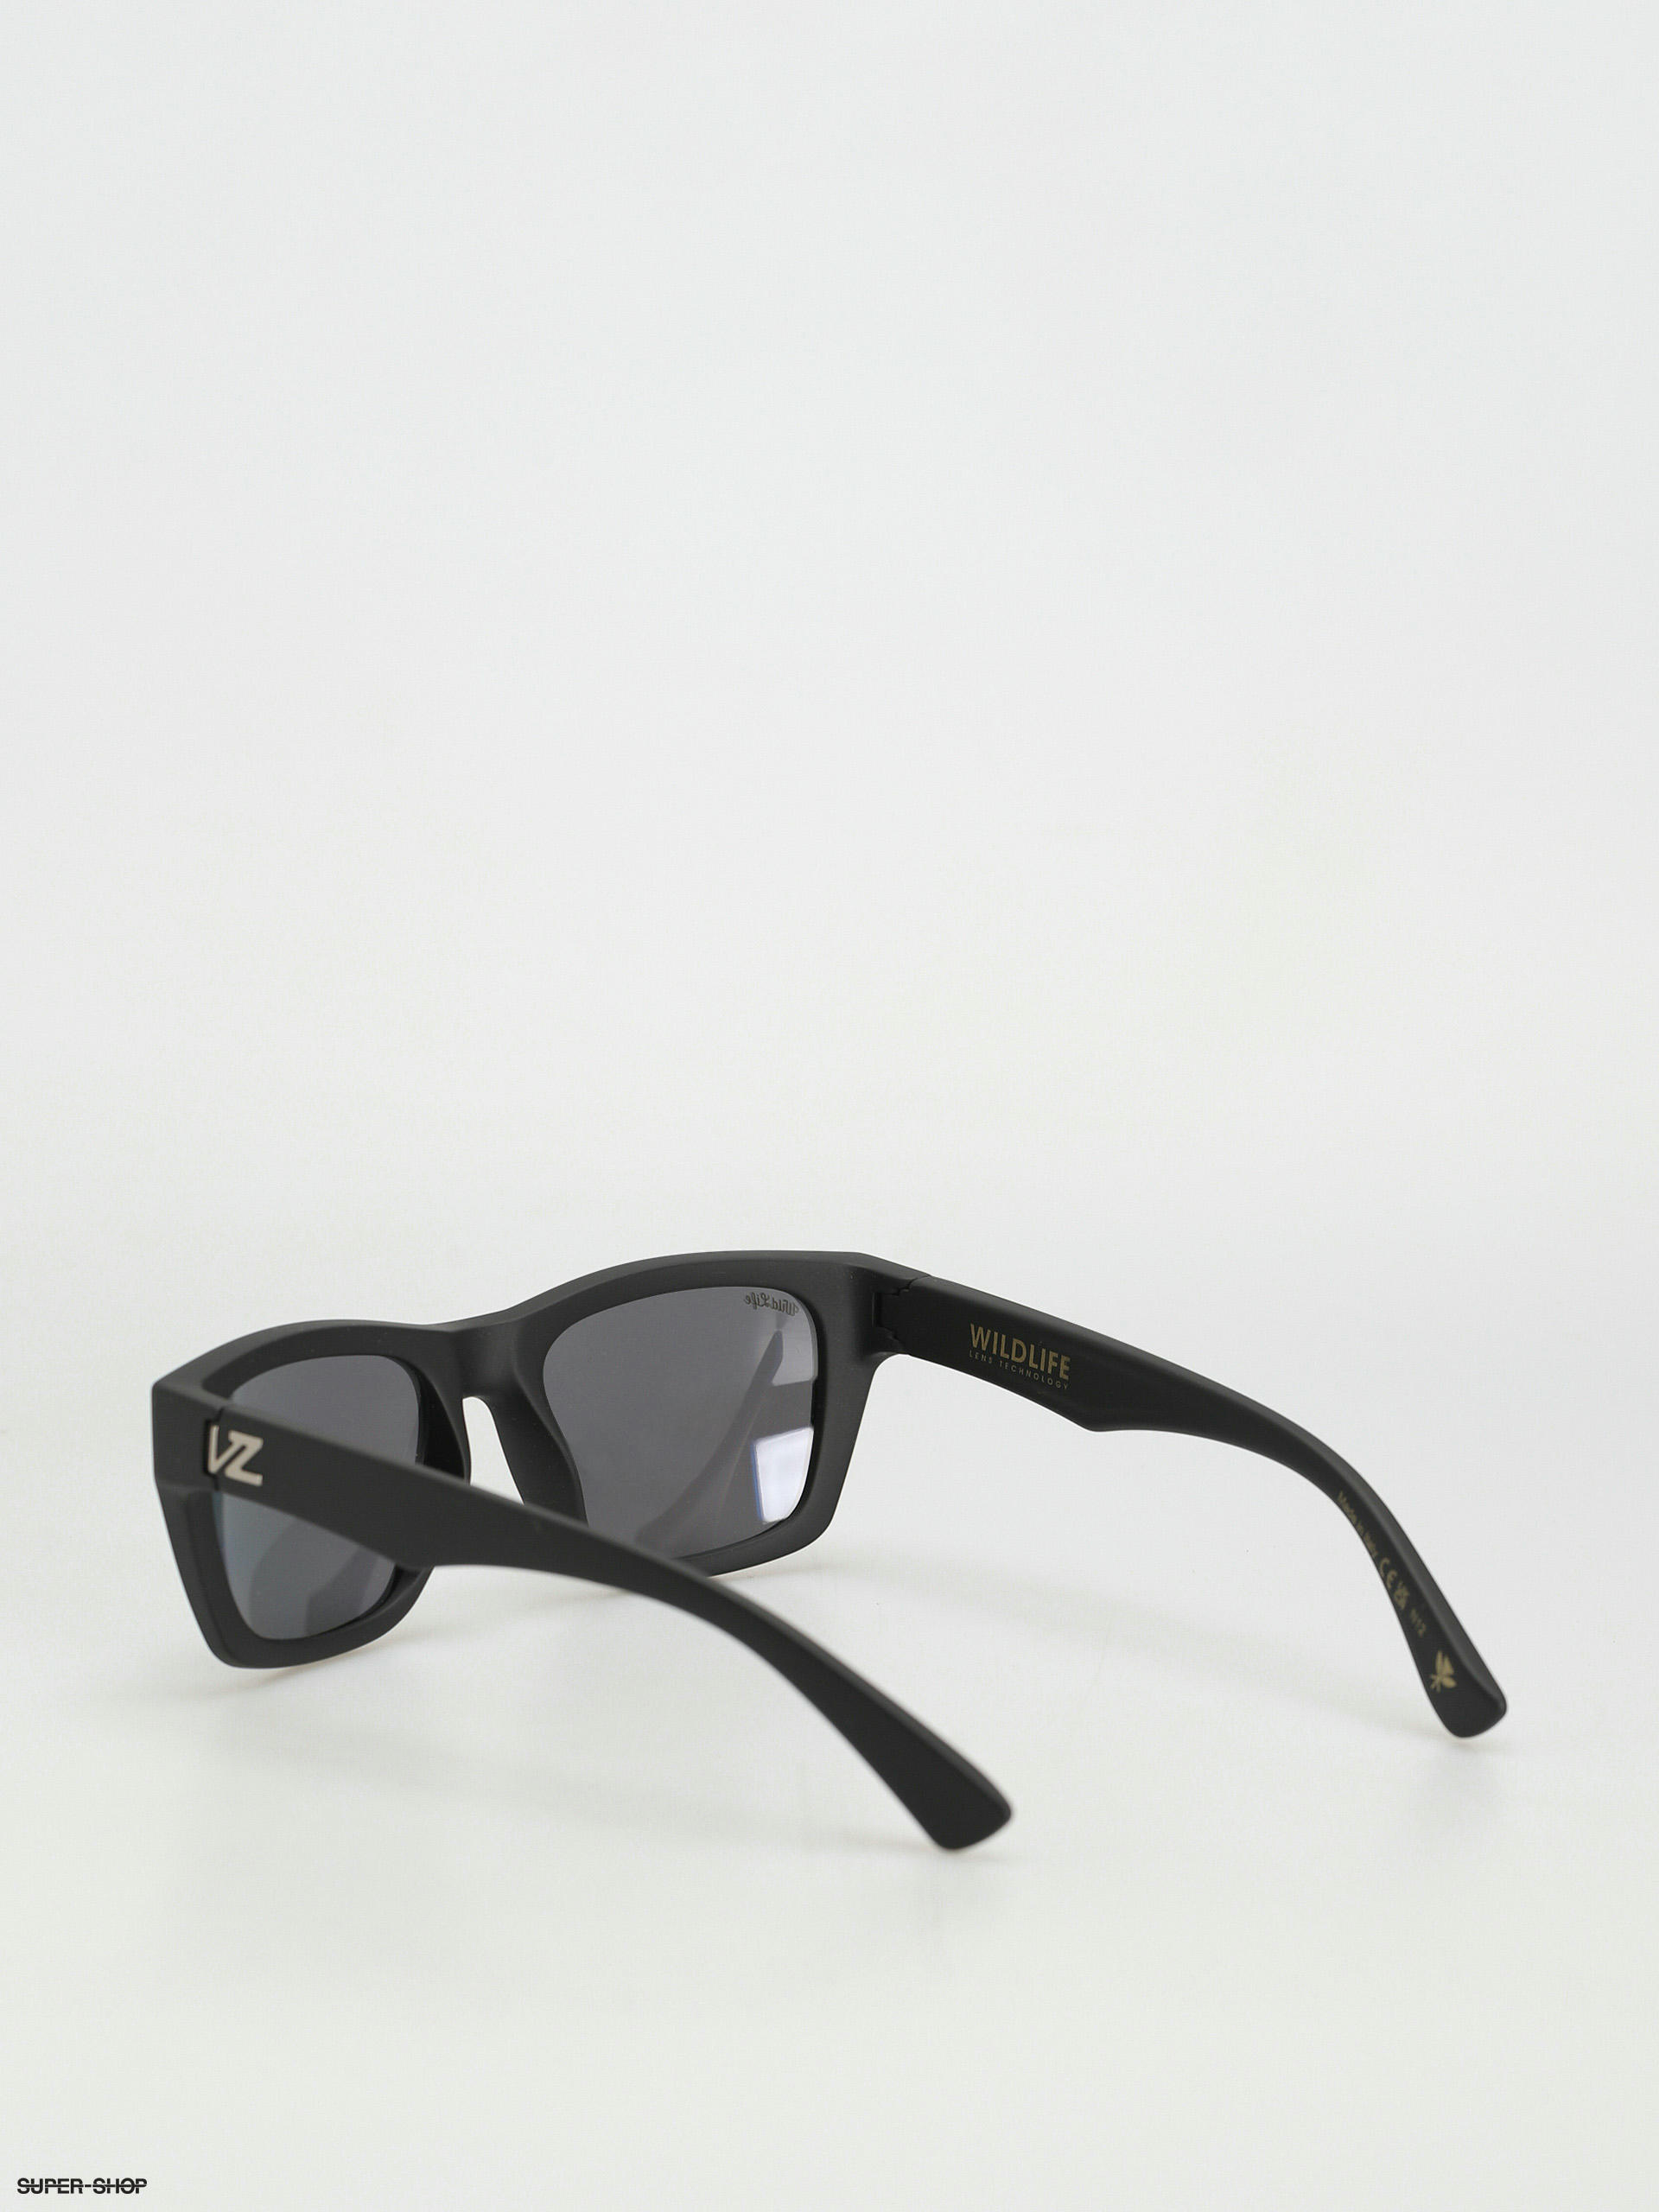 Von Zipper Mode Polar Sunglasses (blk sat/blu flsh plr)